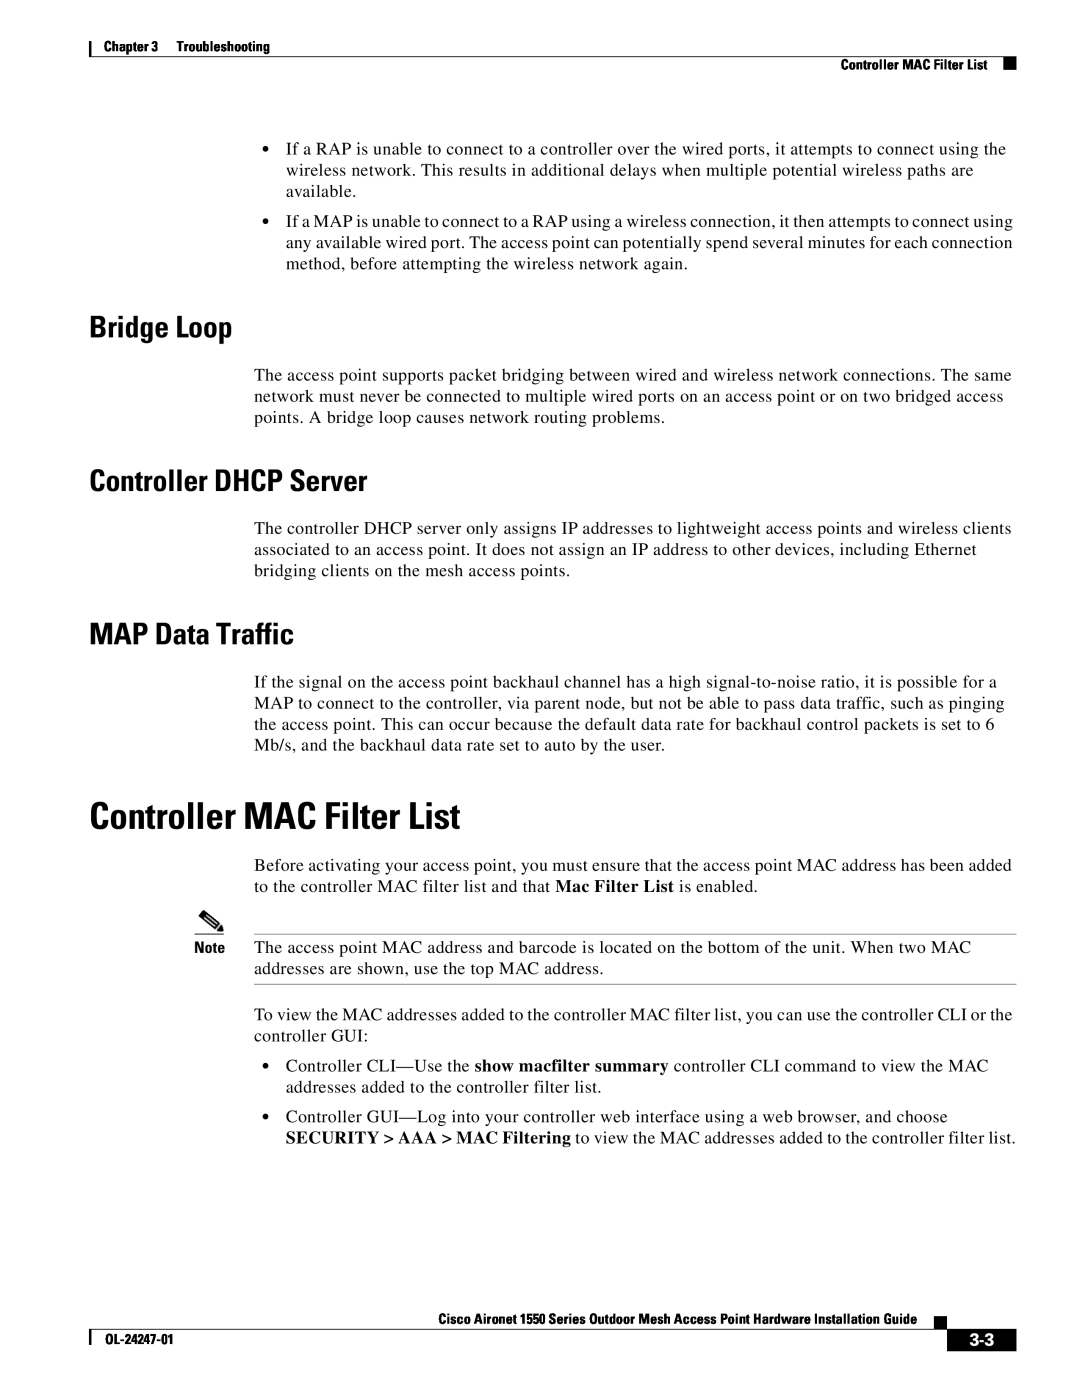 Cisco Systems AIRPWRINJ15002 manual Controller MAC Filter List, Bridge Loop, Controller DHCP Server, MAP Data Traffic 